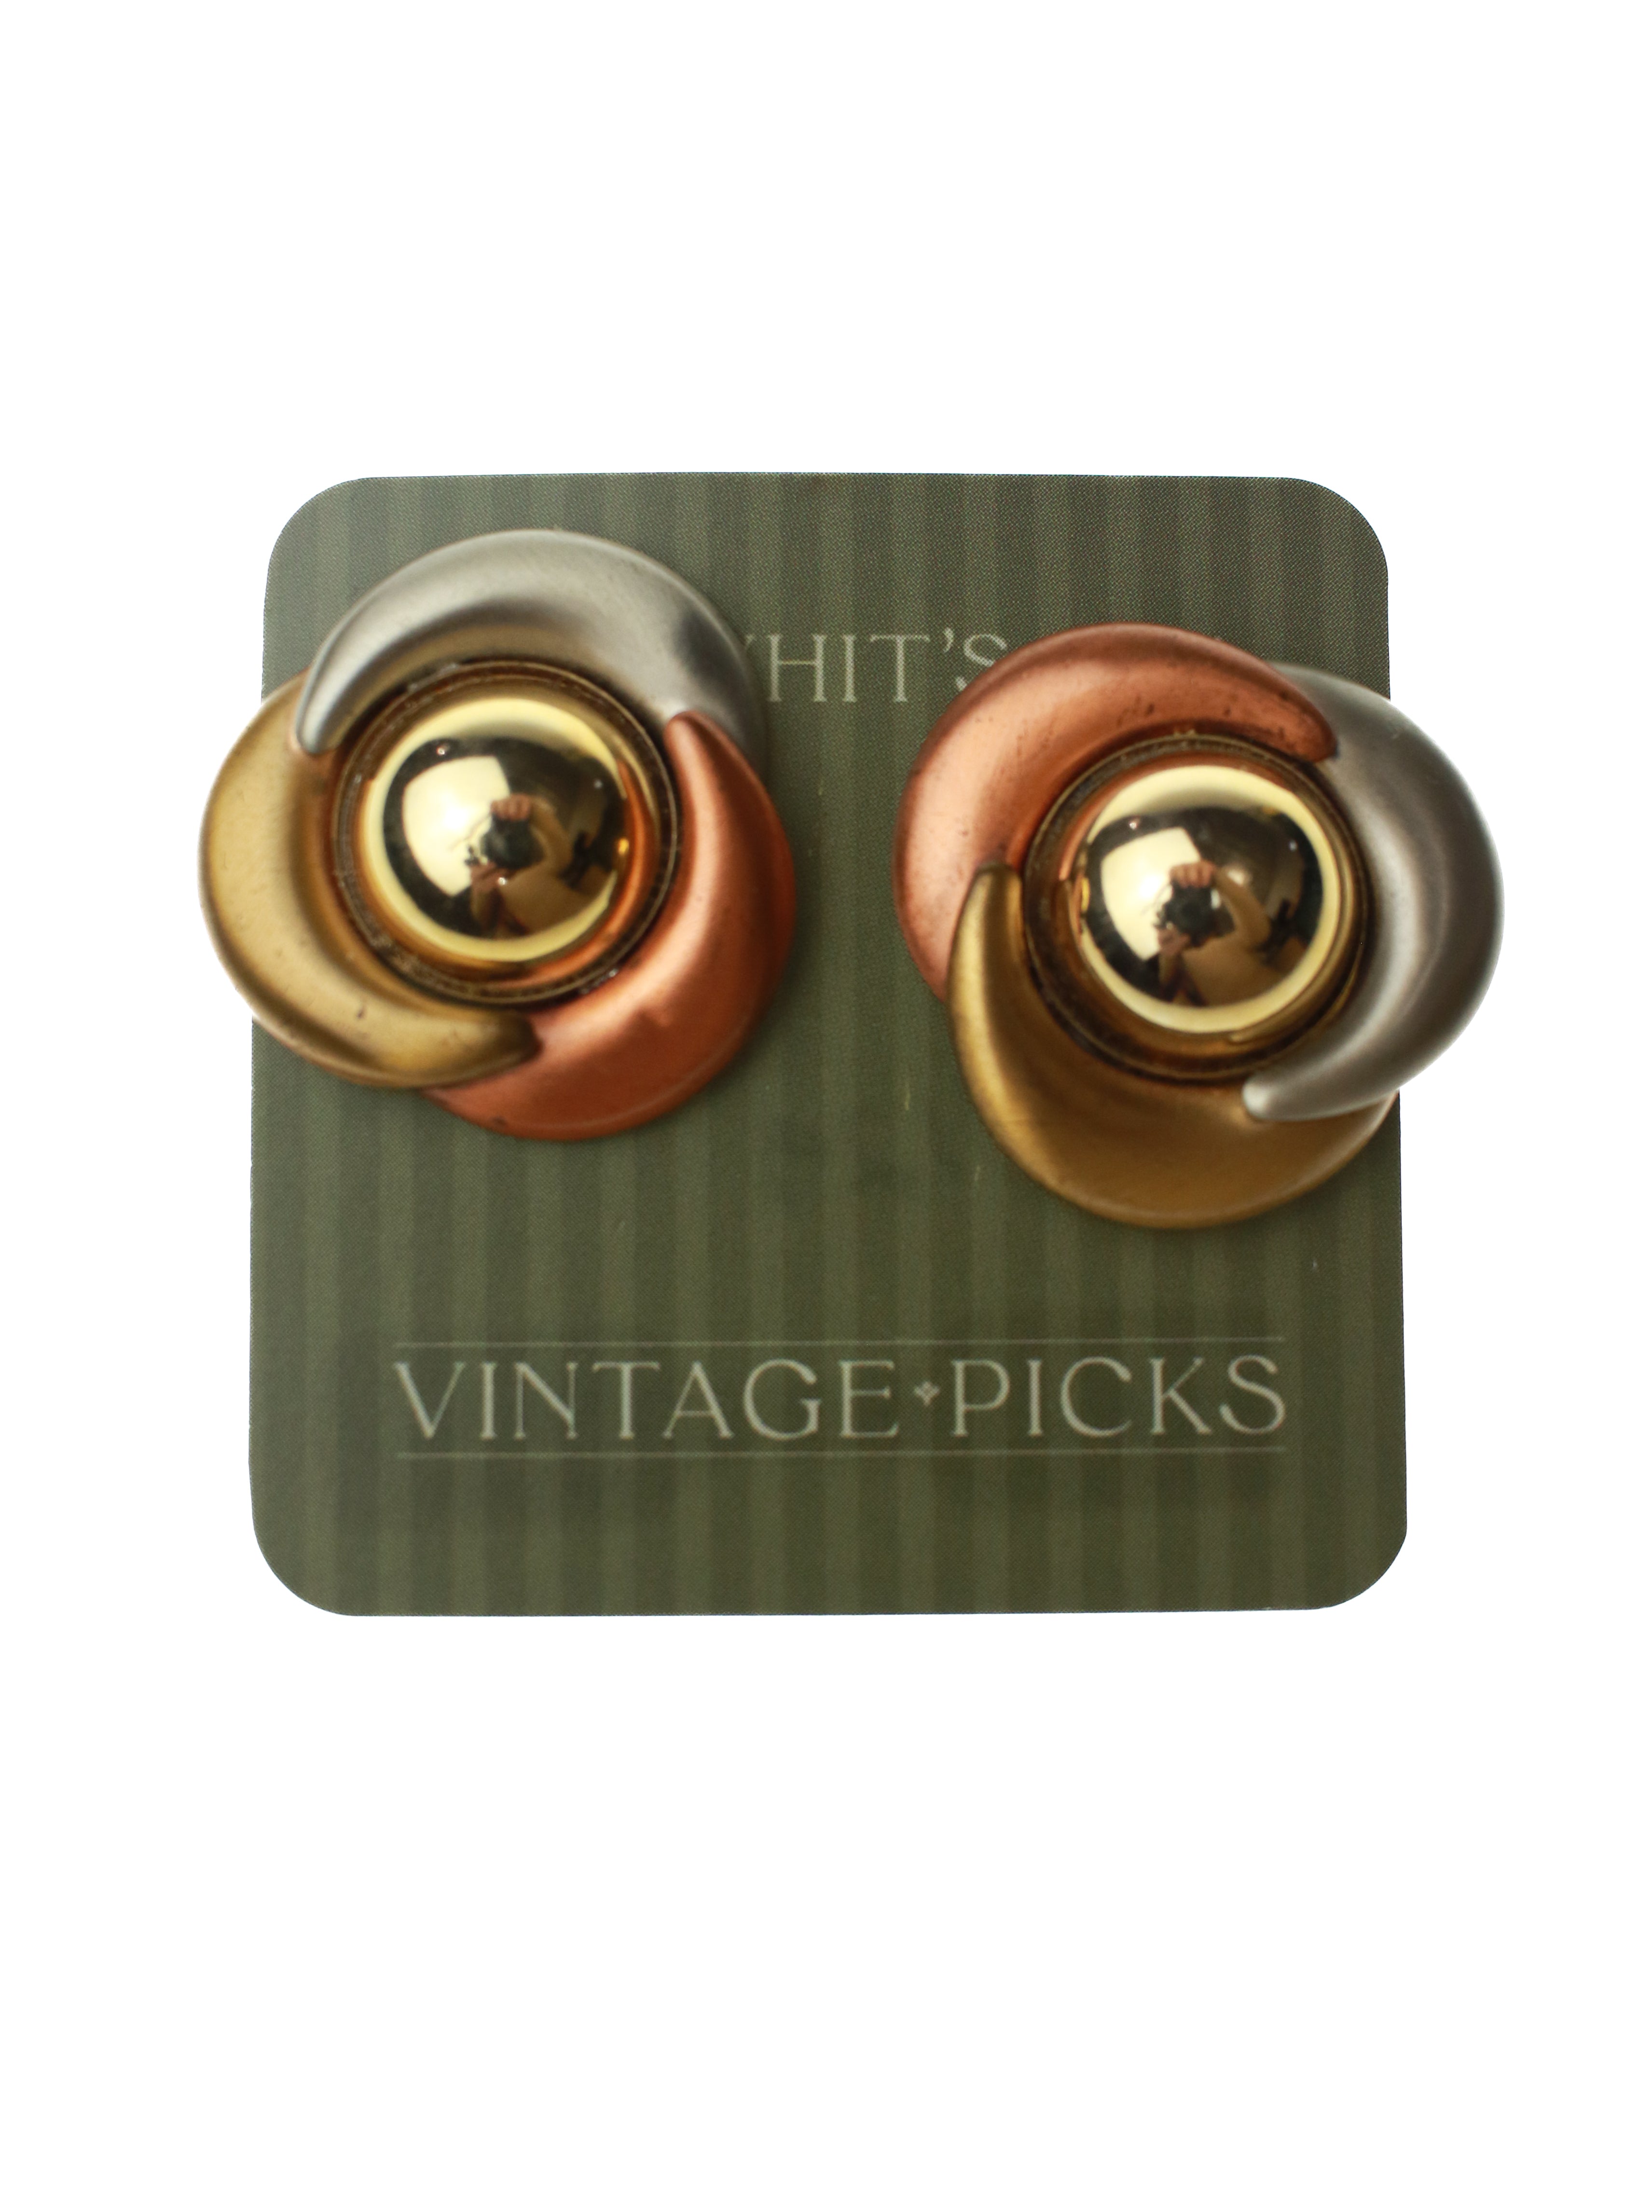 Whit's Vintage Picks- Earrings 129